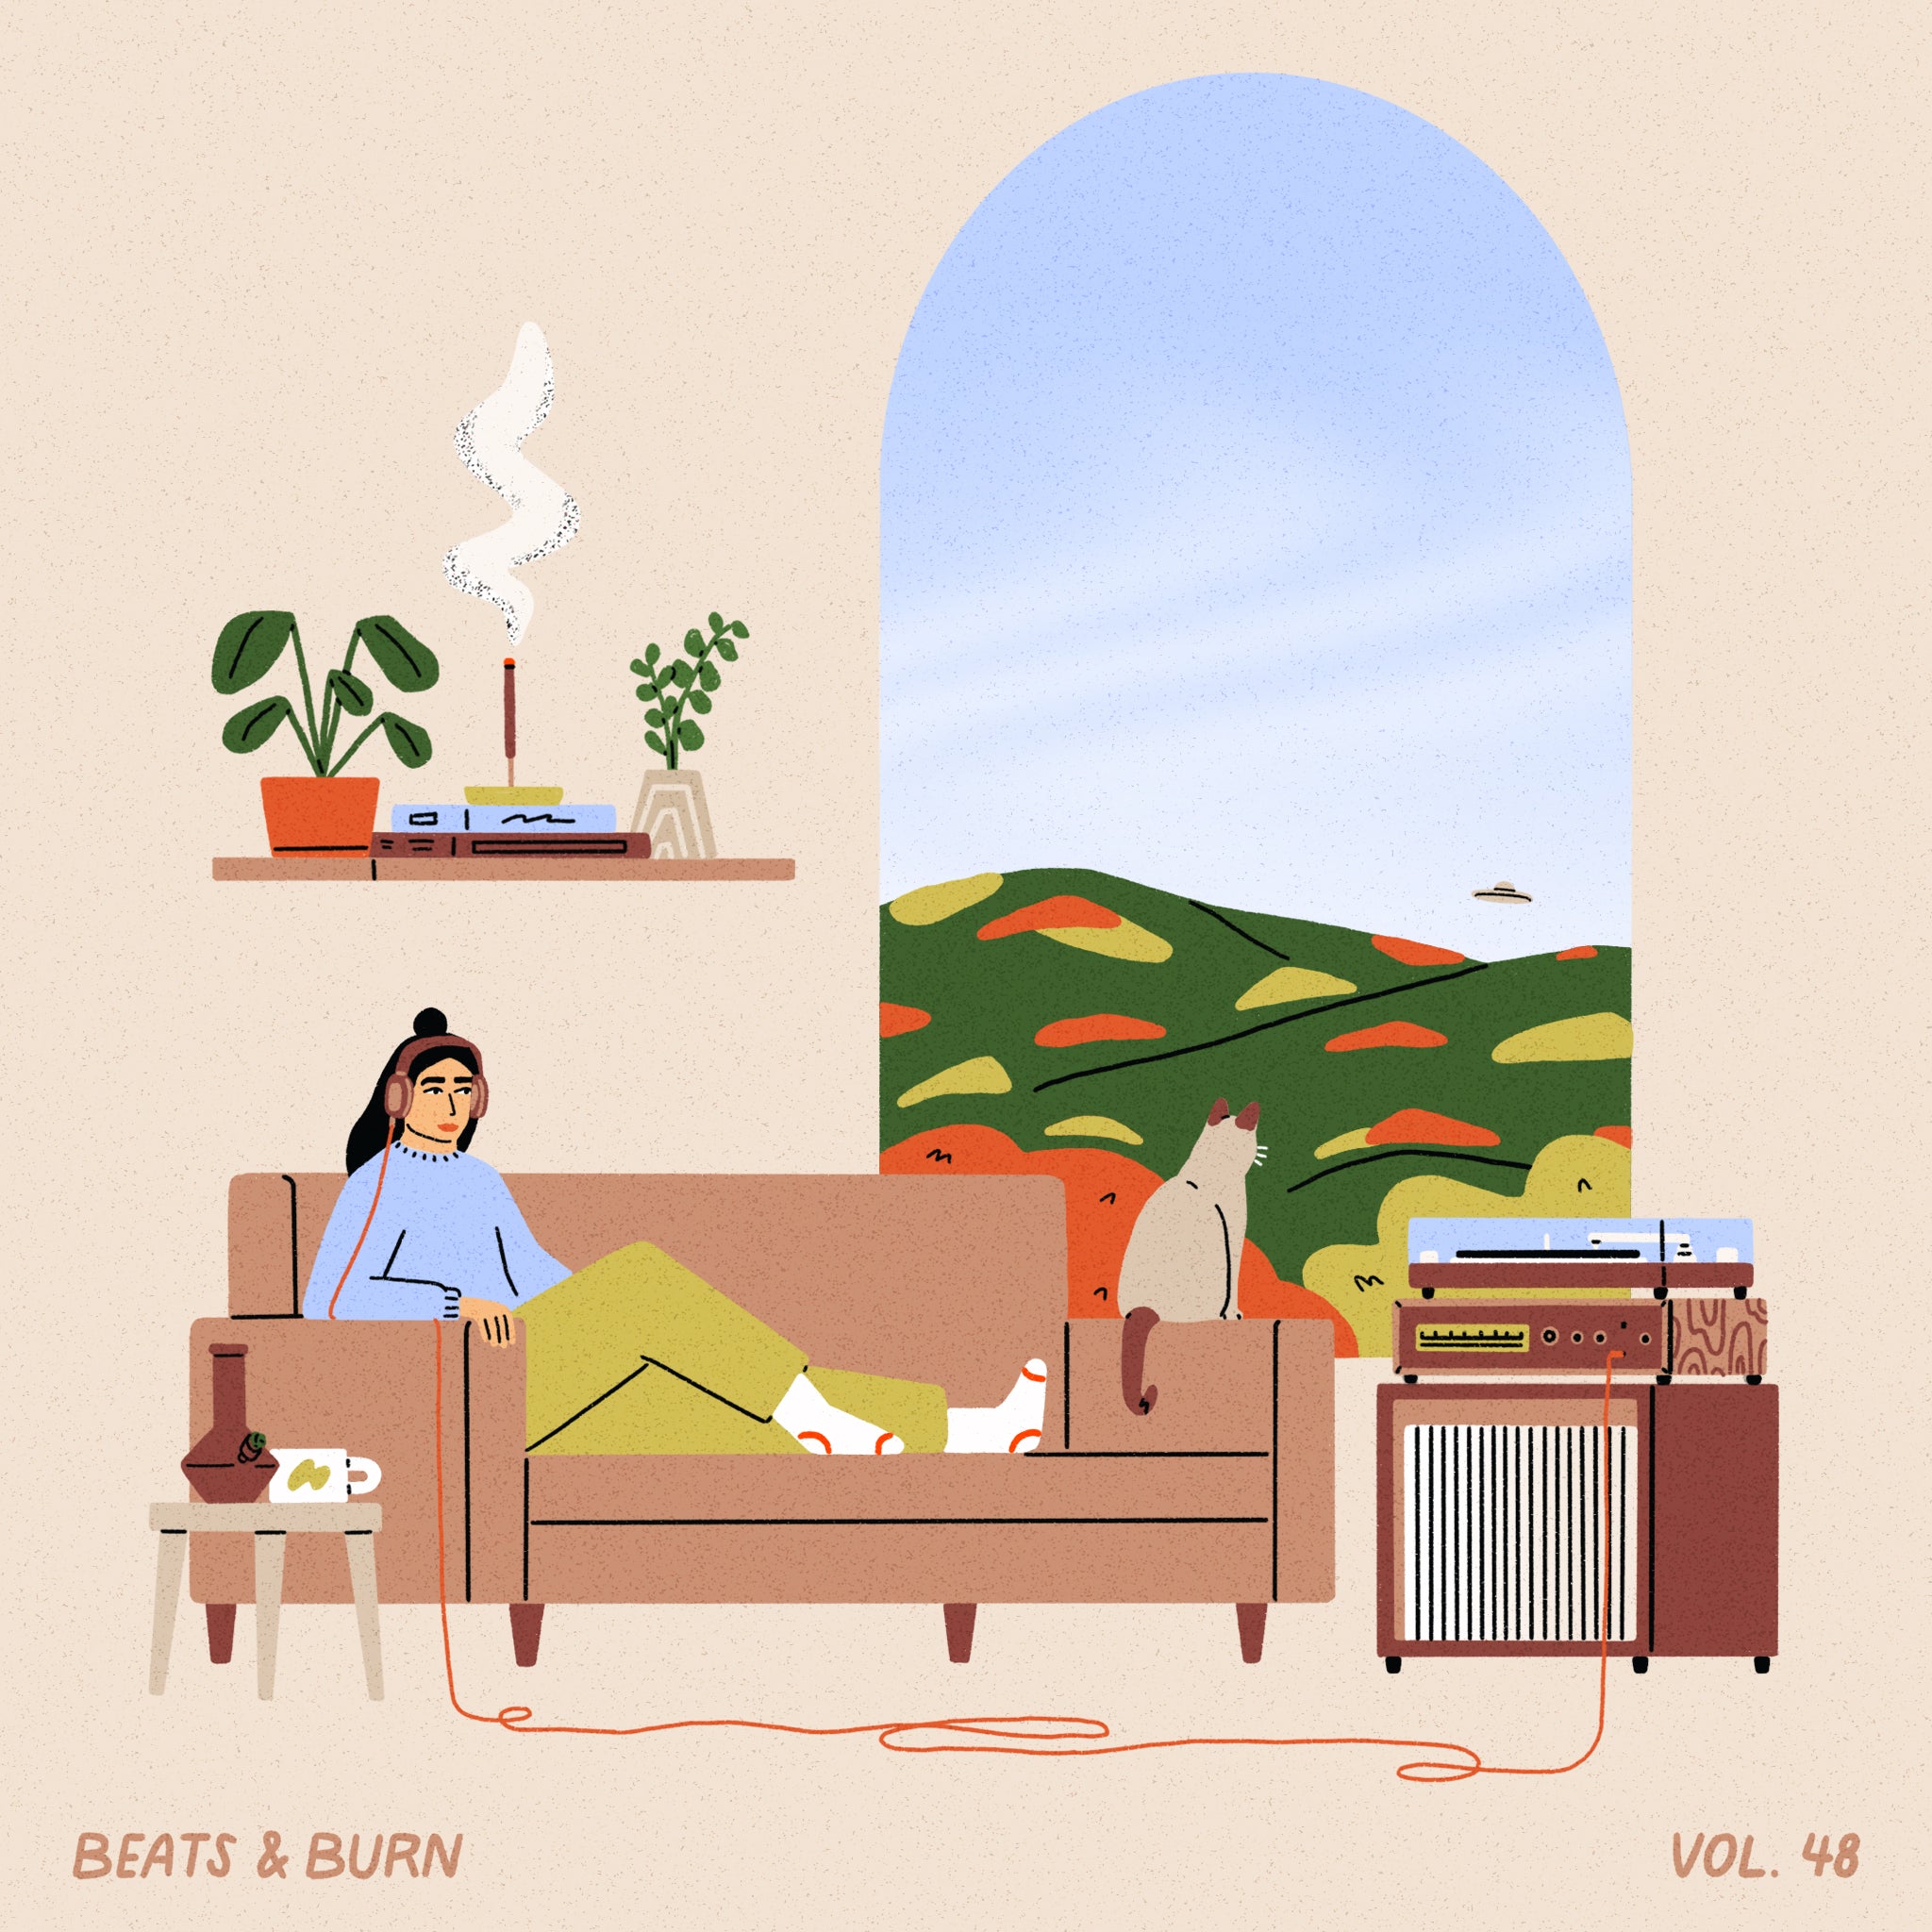 Beats & Burn: Volume 48 by artist Sunny Eckerle